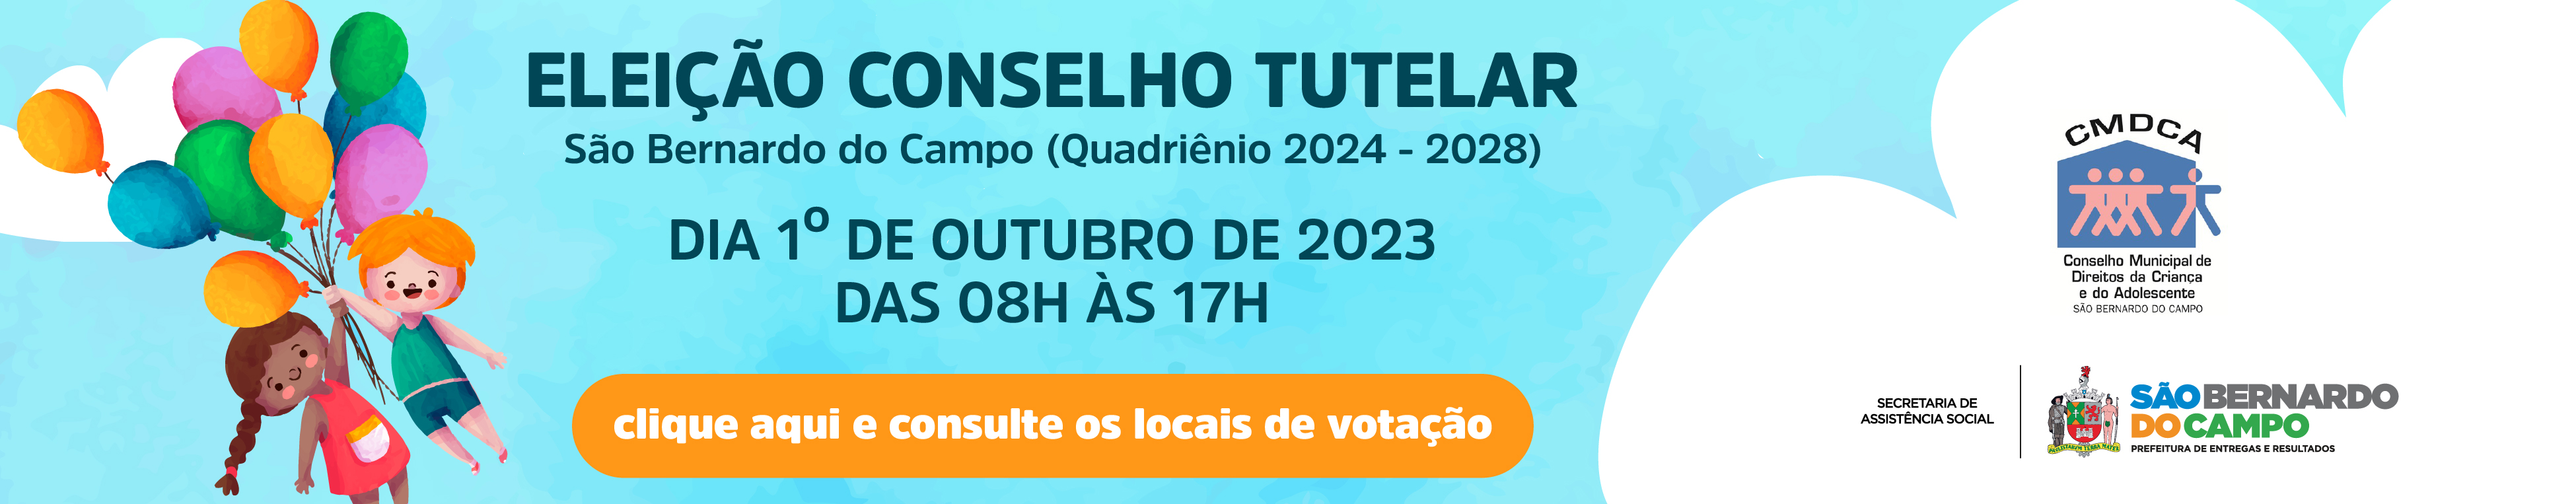 CONSELHO TUTELAR 2024